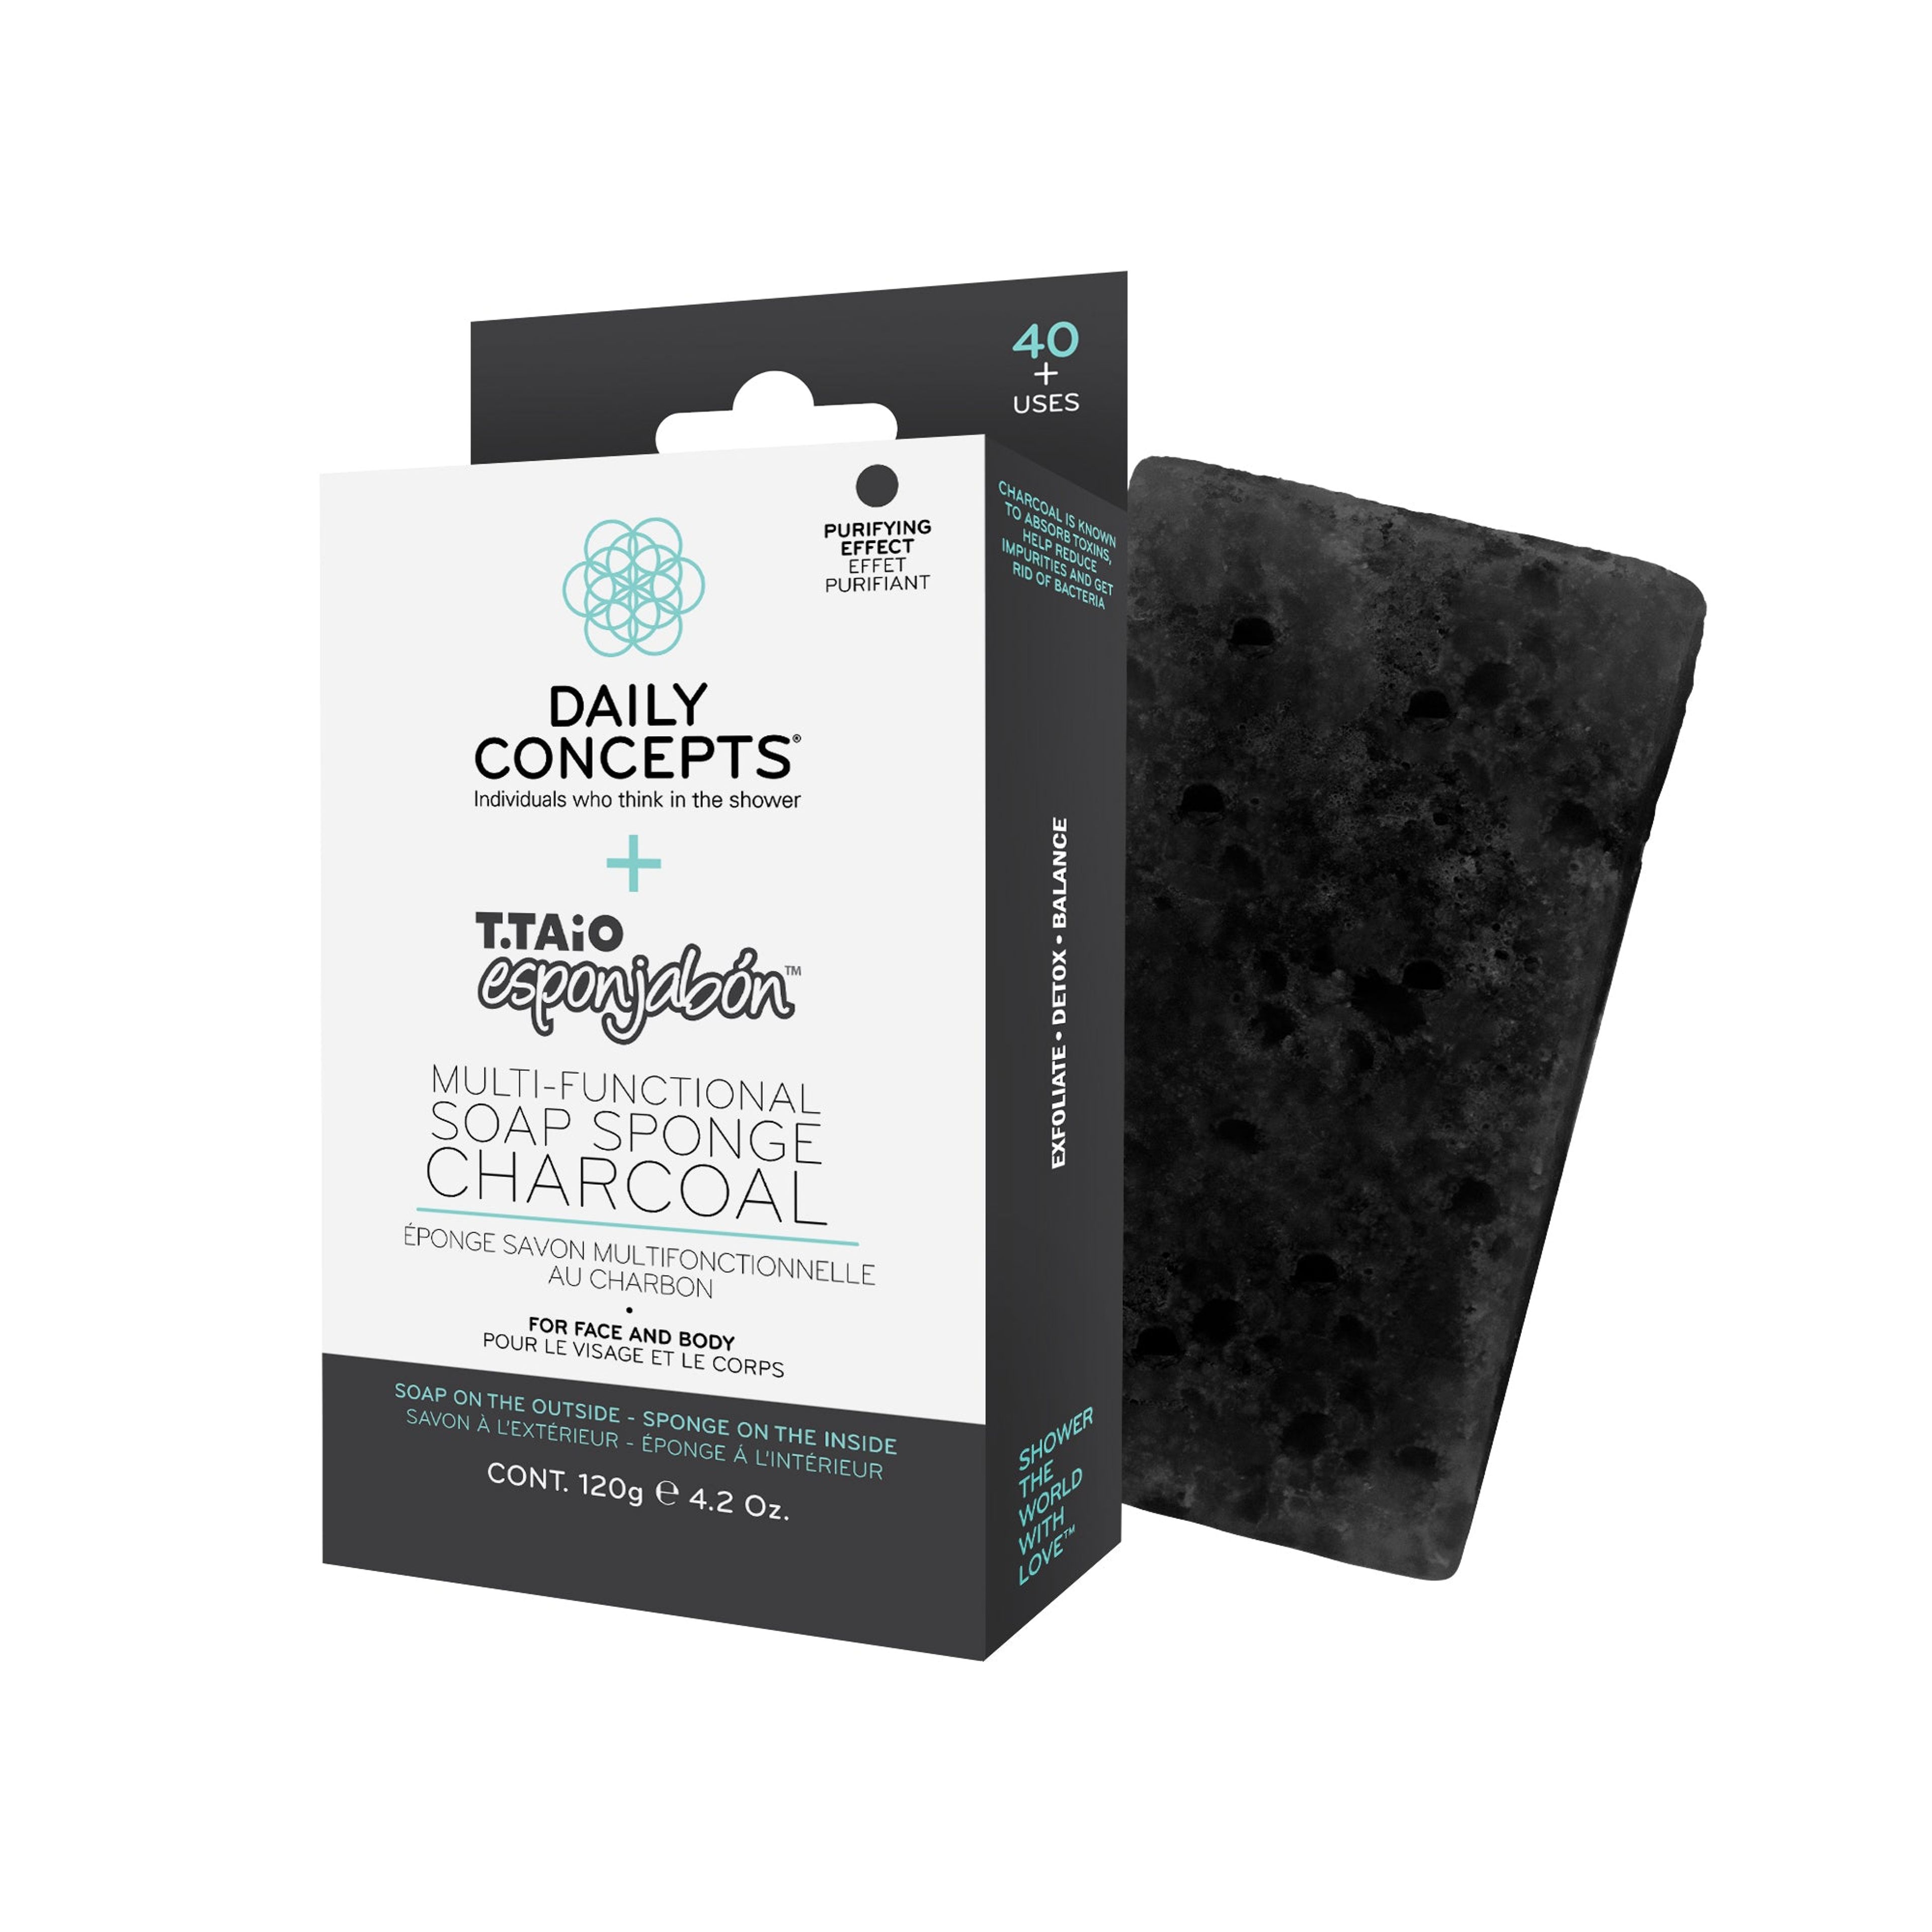 Daily Concepts + Esponjabon Multi-Functional Soap Sponge Charcoal